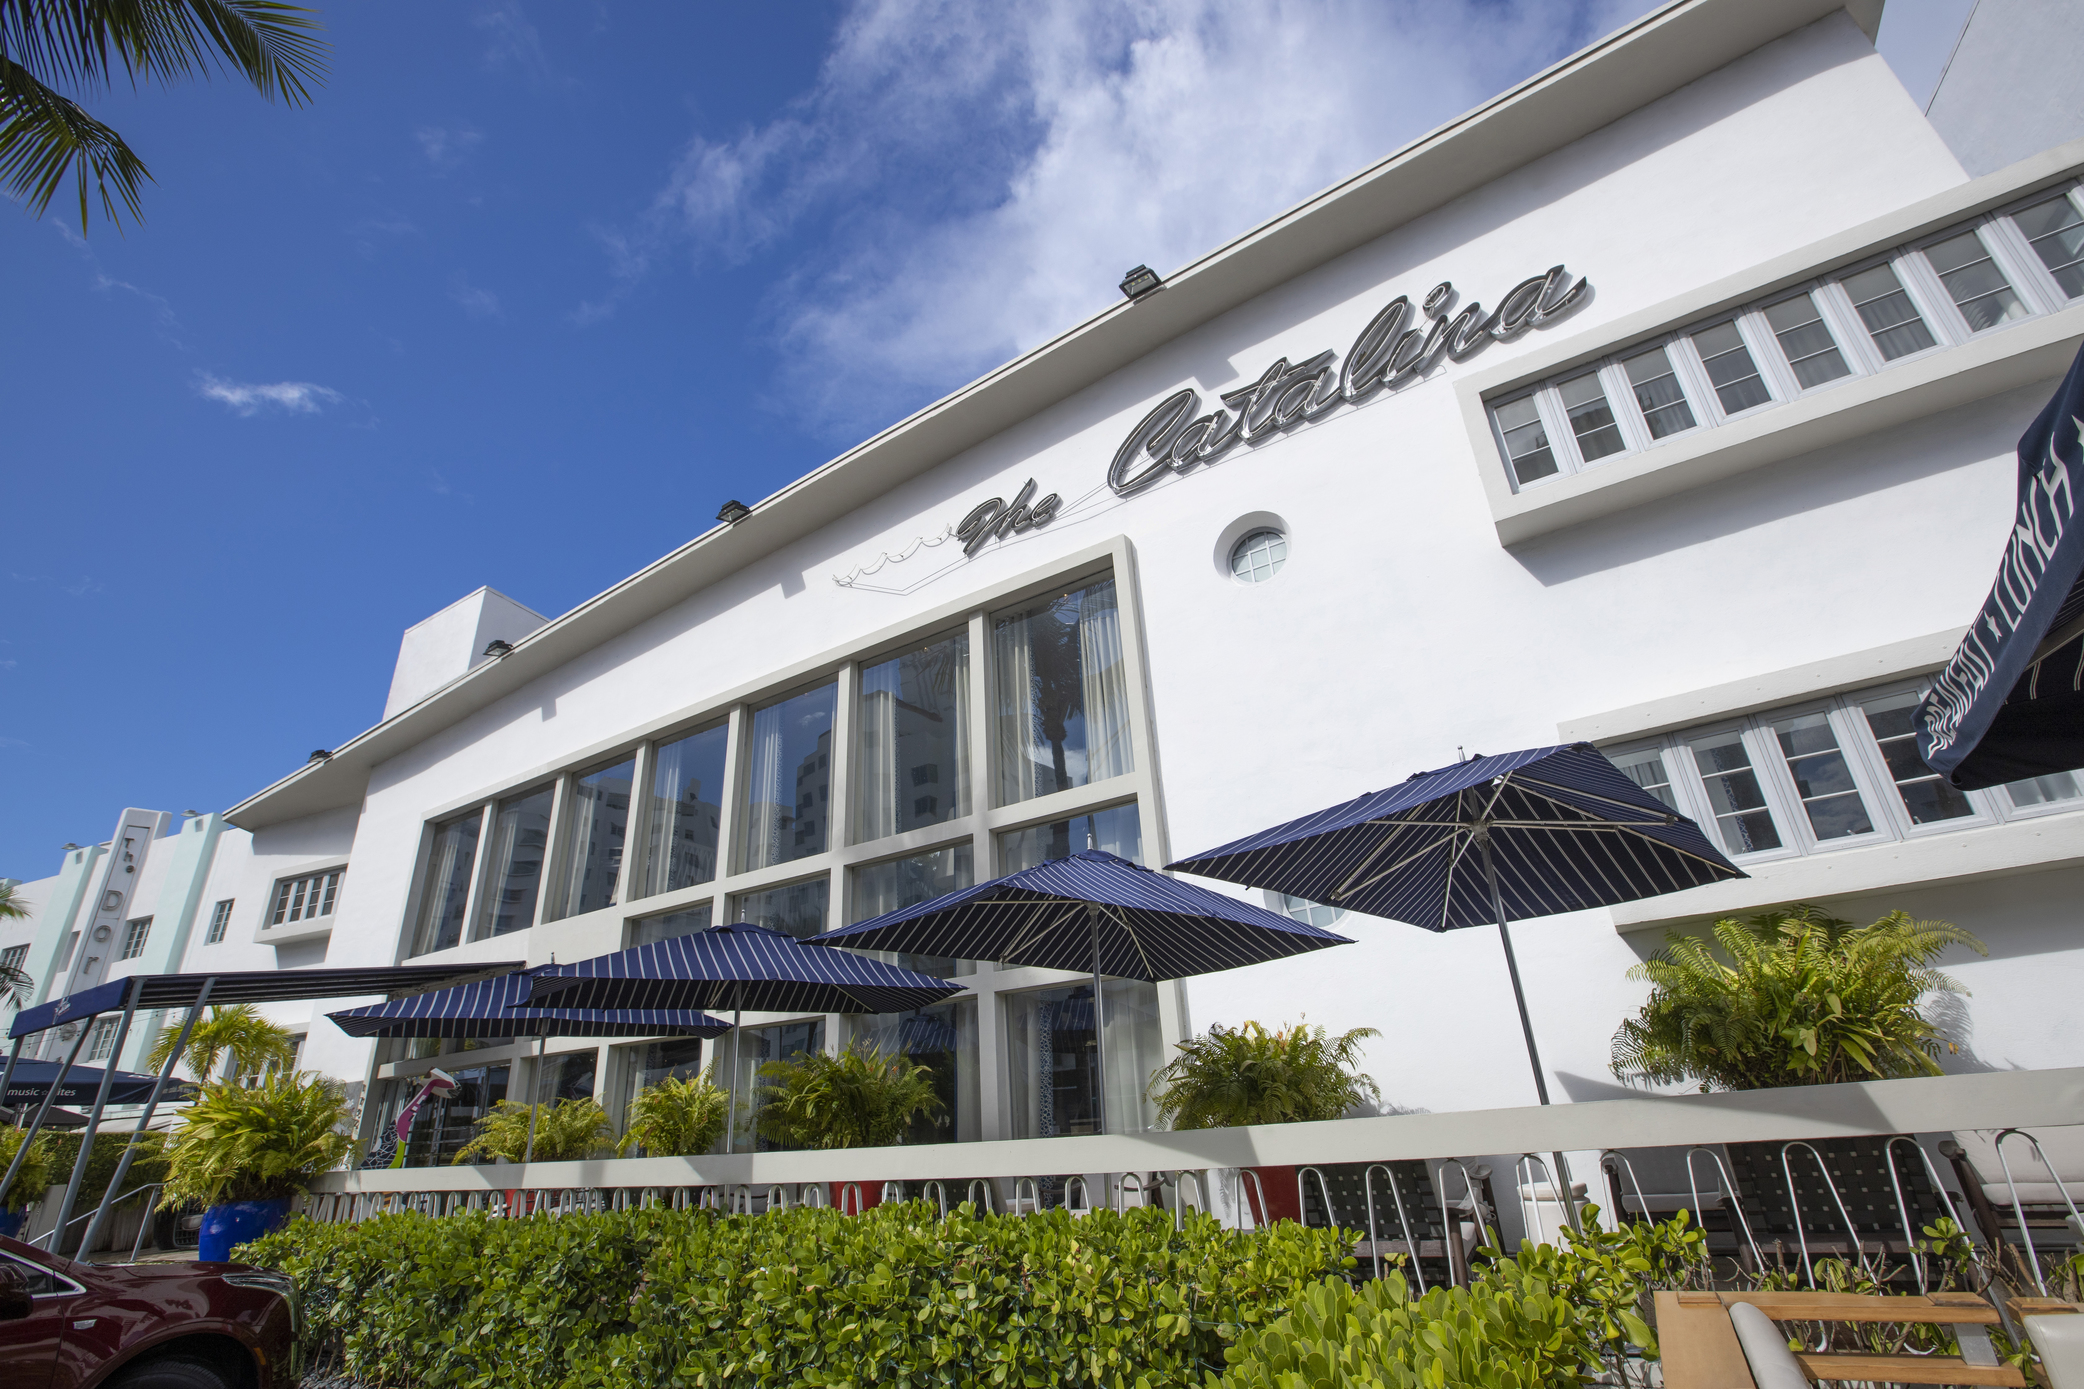 The Catalina Hotel & Beach Club image